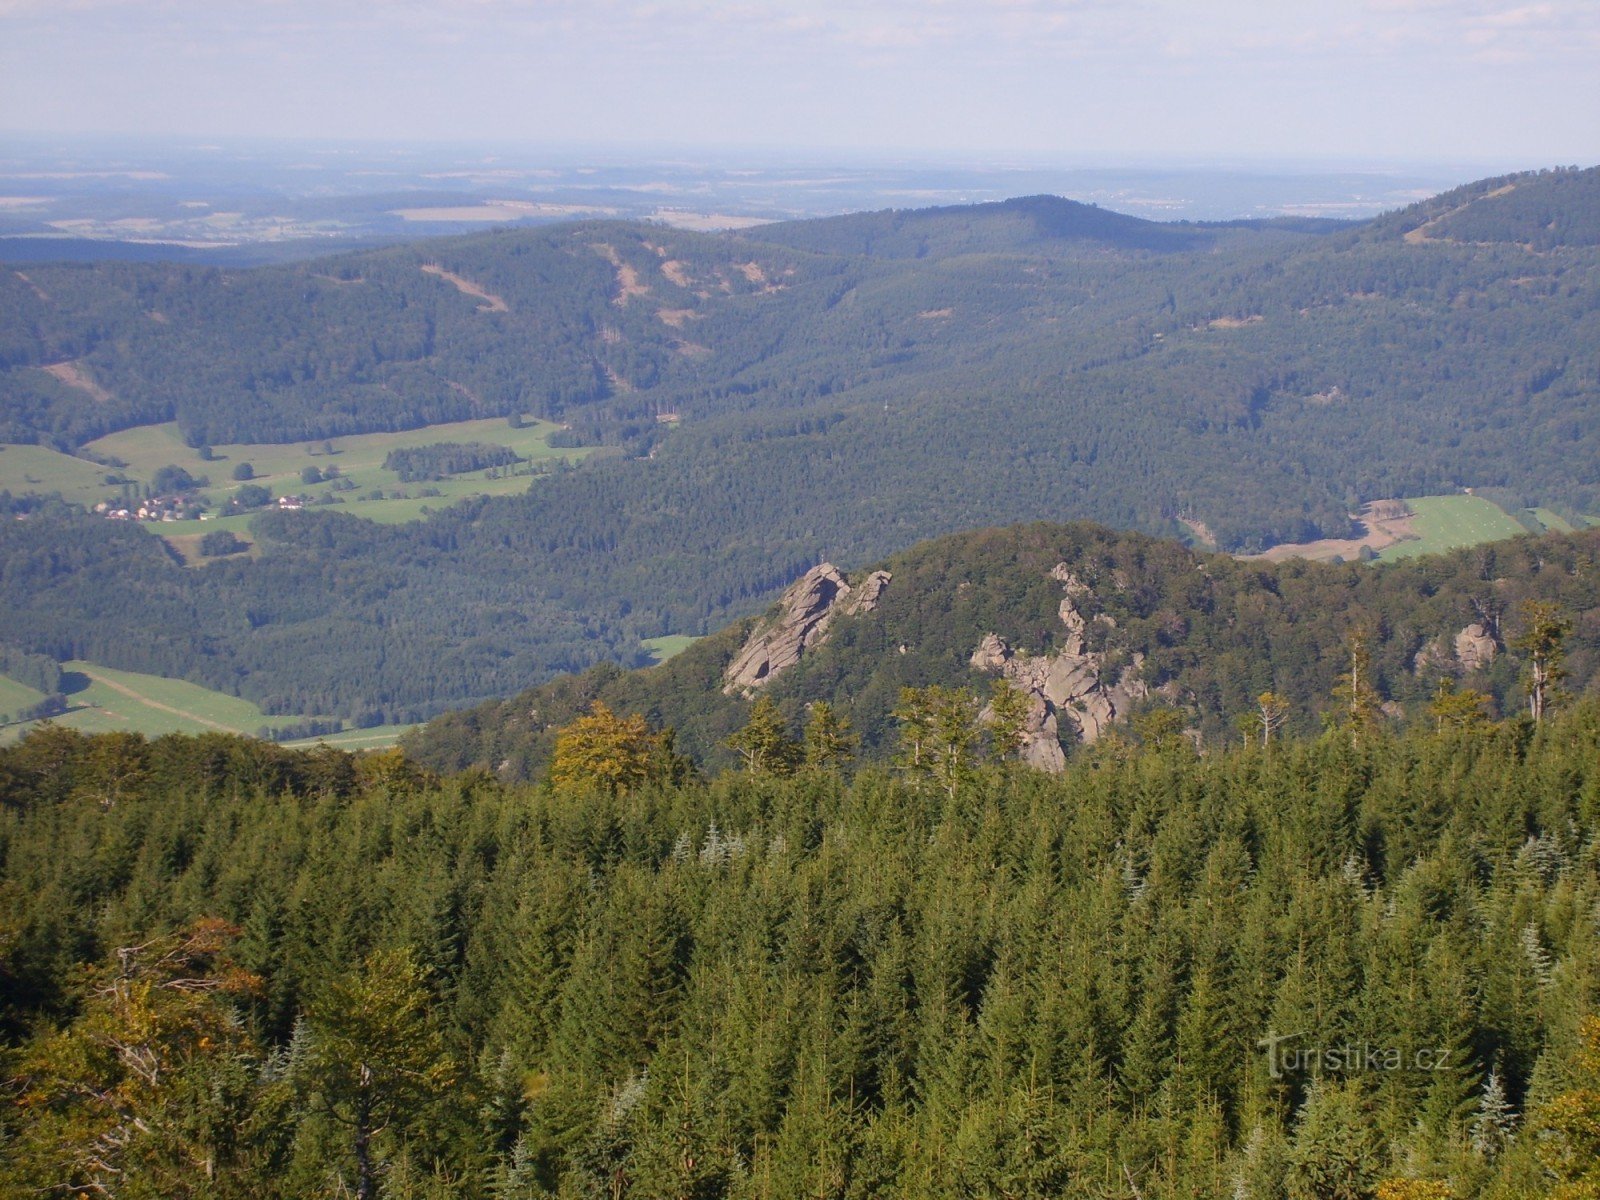 The view from Ptáčí kup